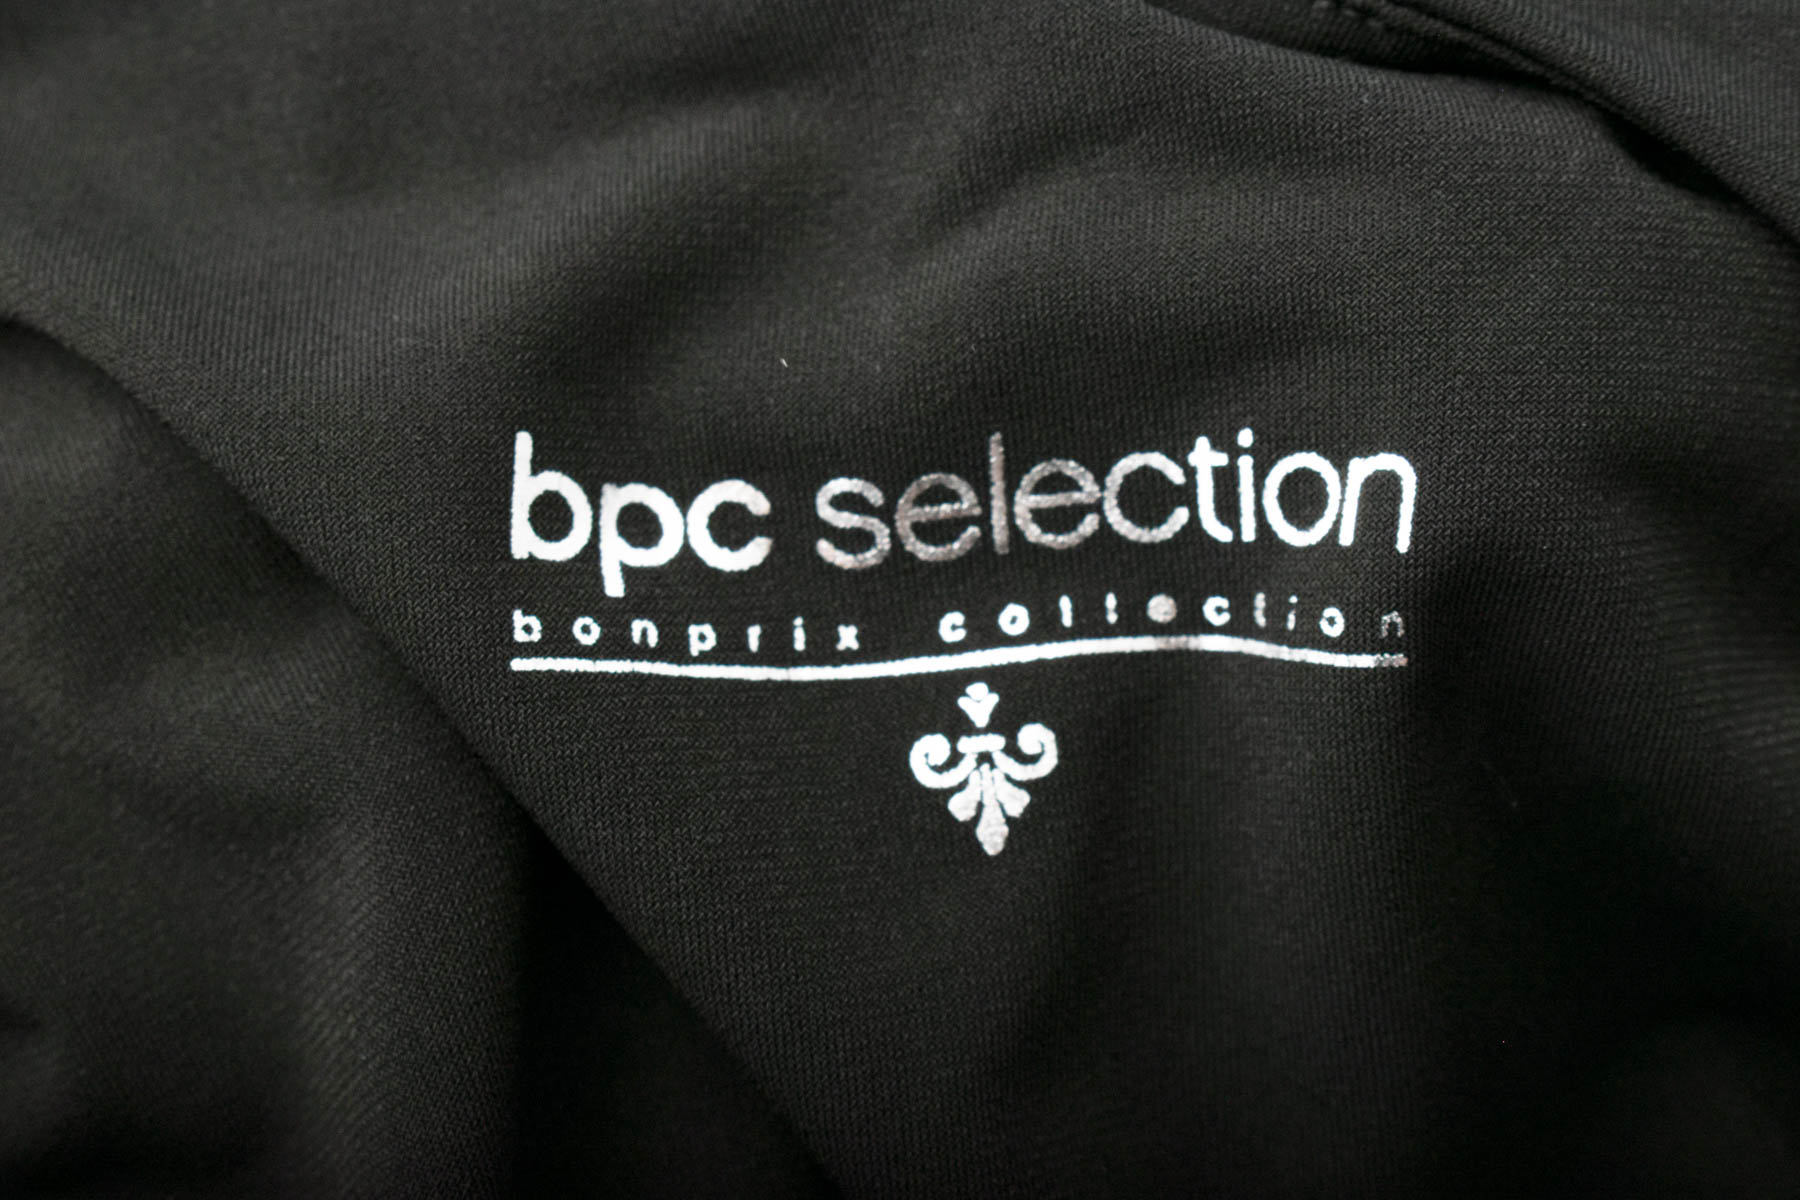 Dress - bpc selection bonprix collection - 2